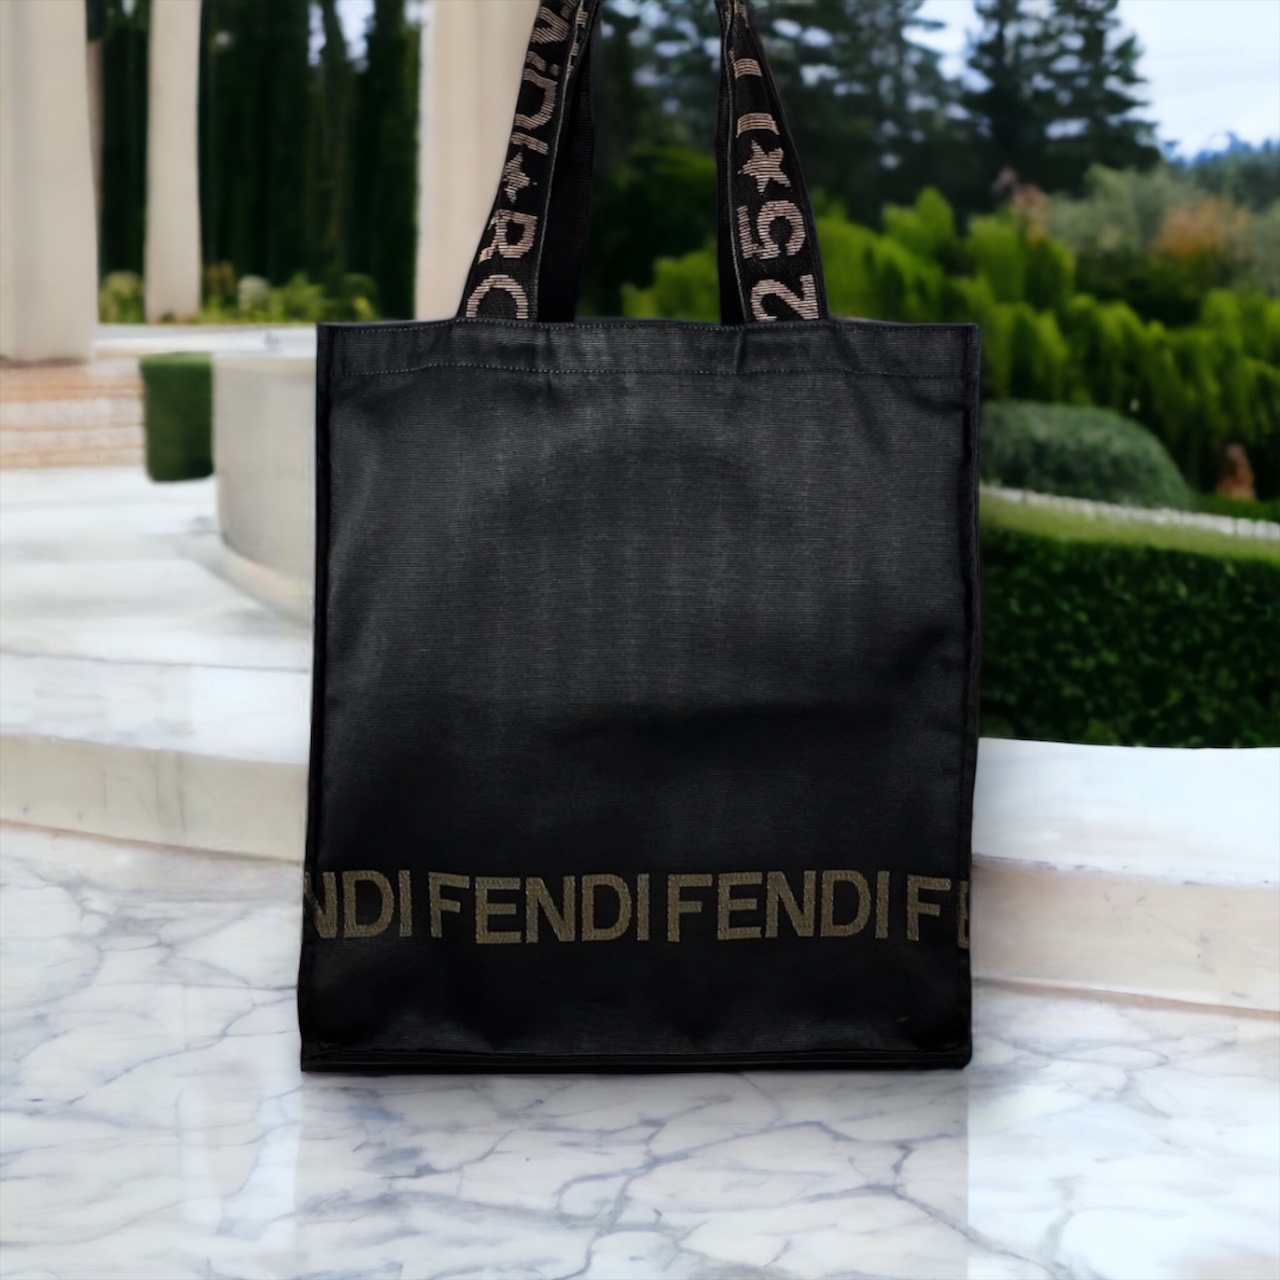 Fendi handbags AUTHENTIC VINTAGE  Fendi handbag, Fendi, Fendi bags